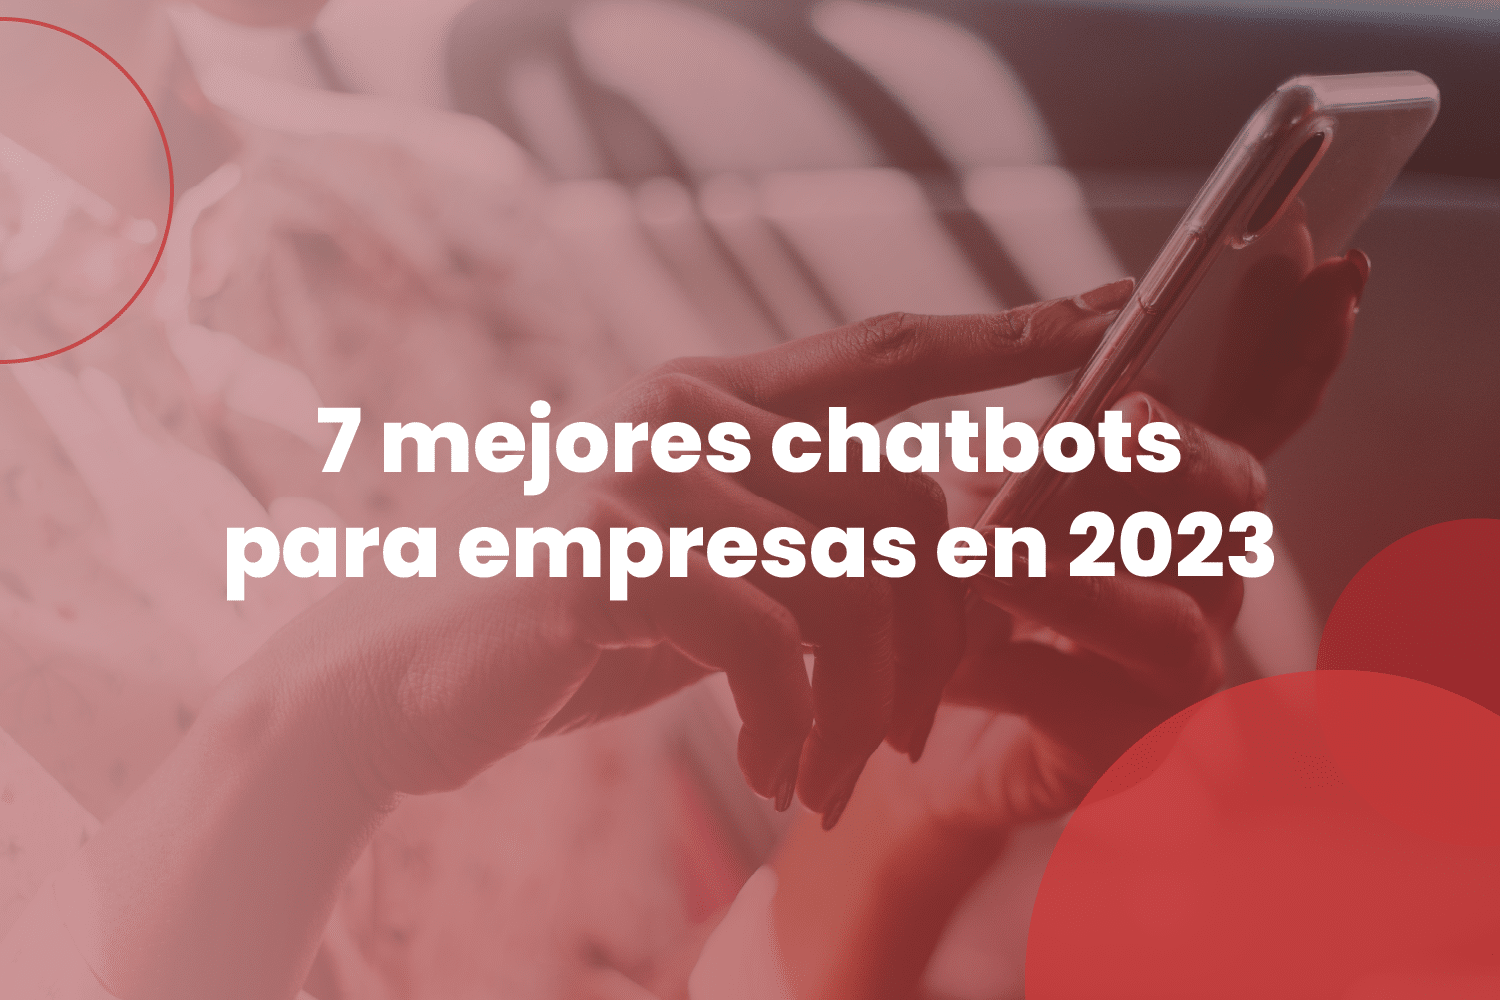 7 mejores chatbots para empresas en 2023